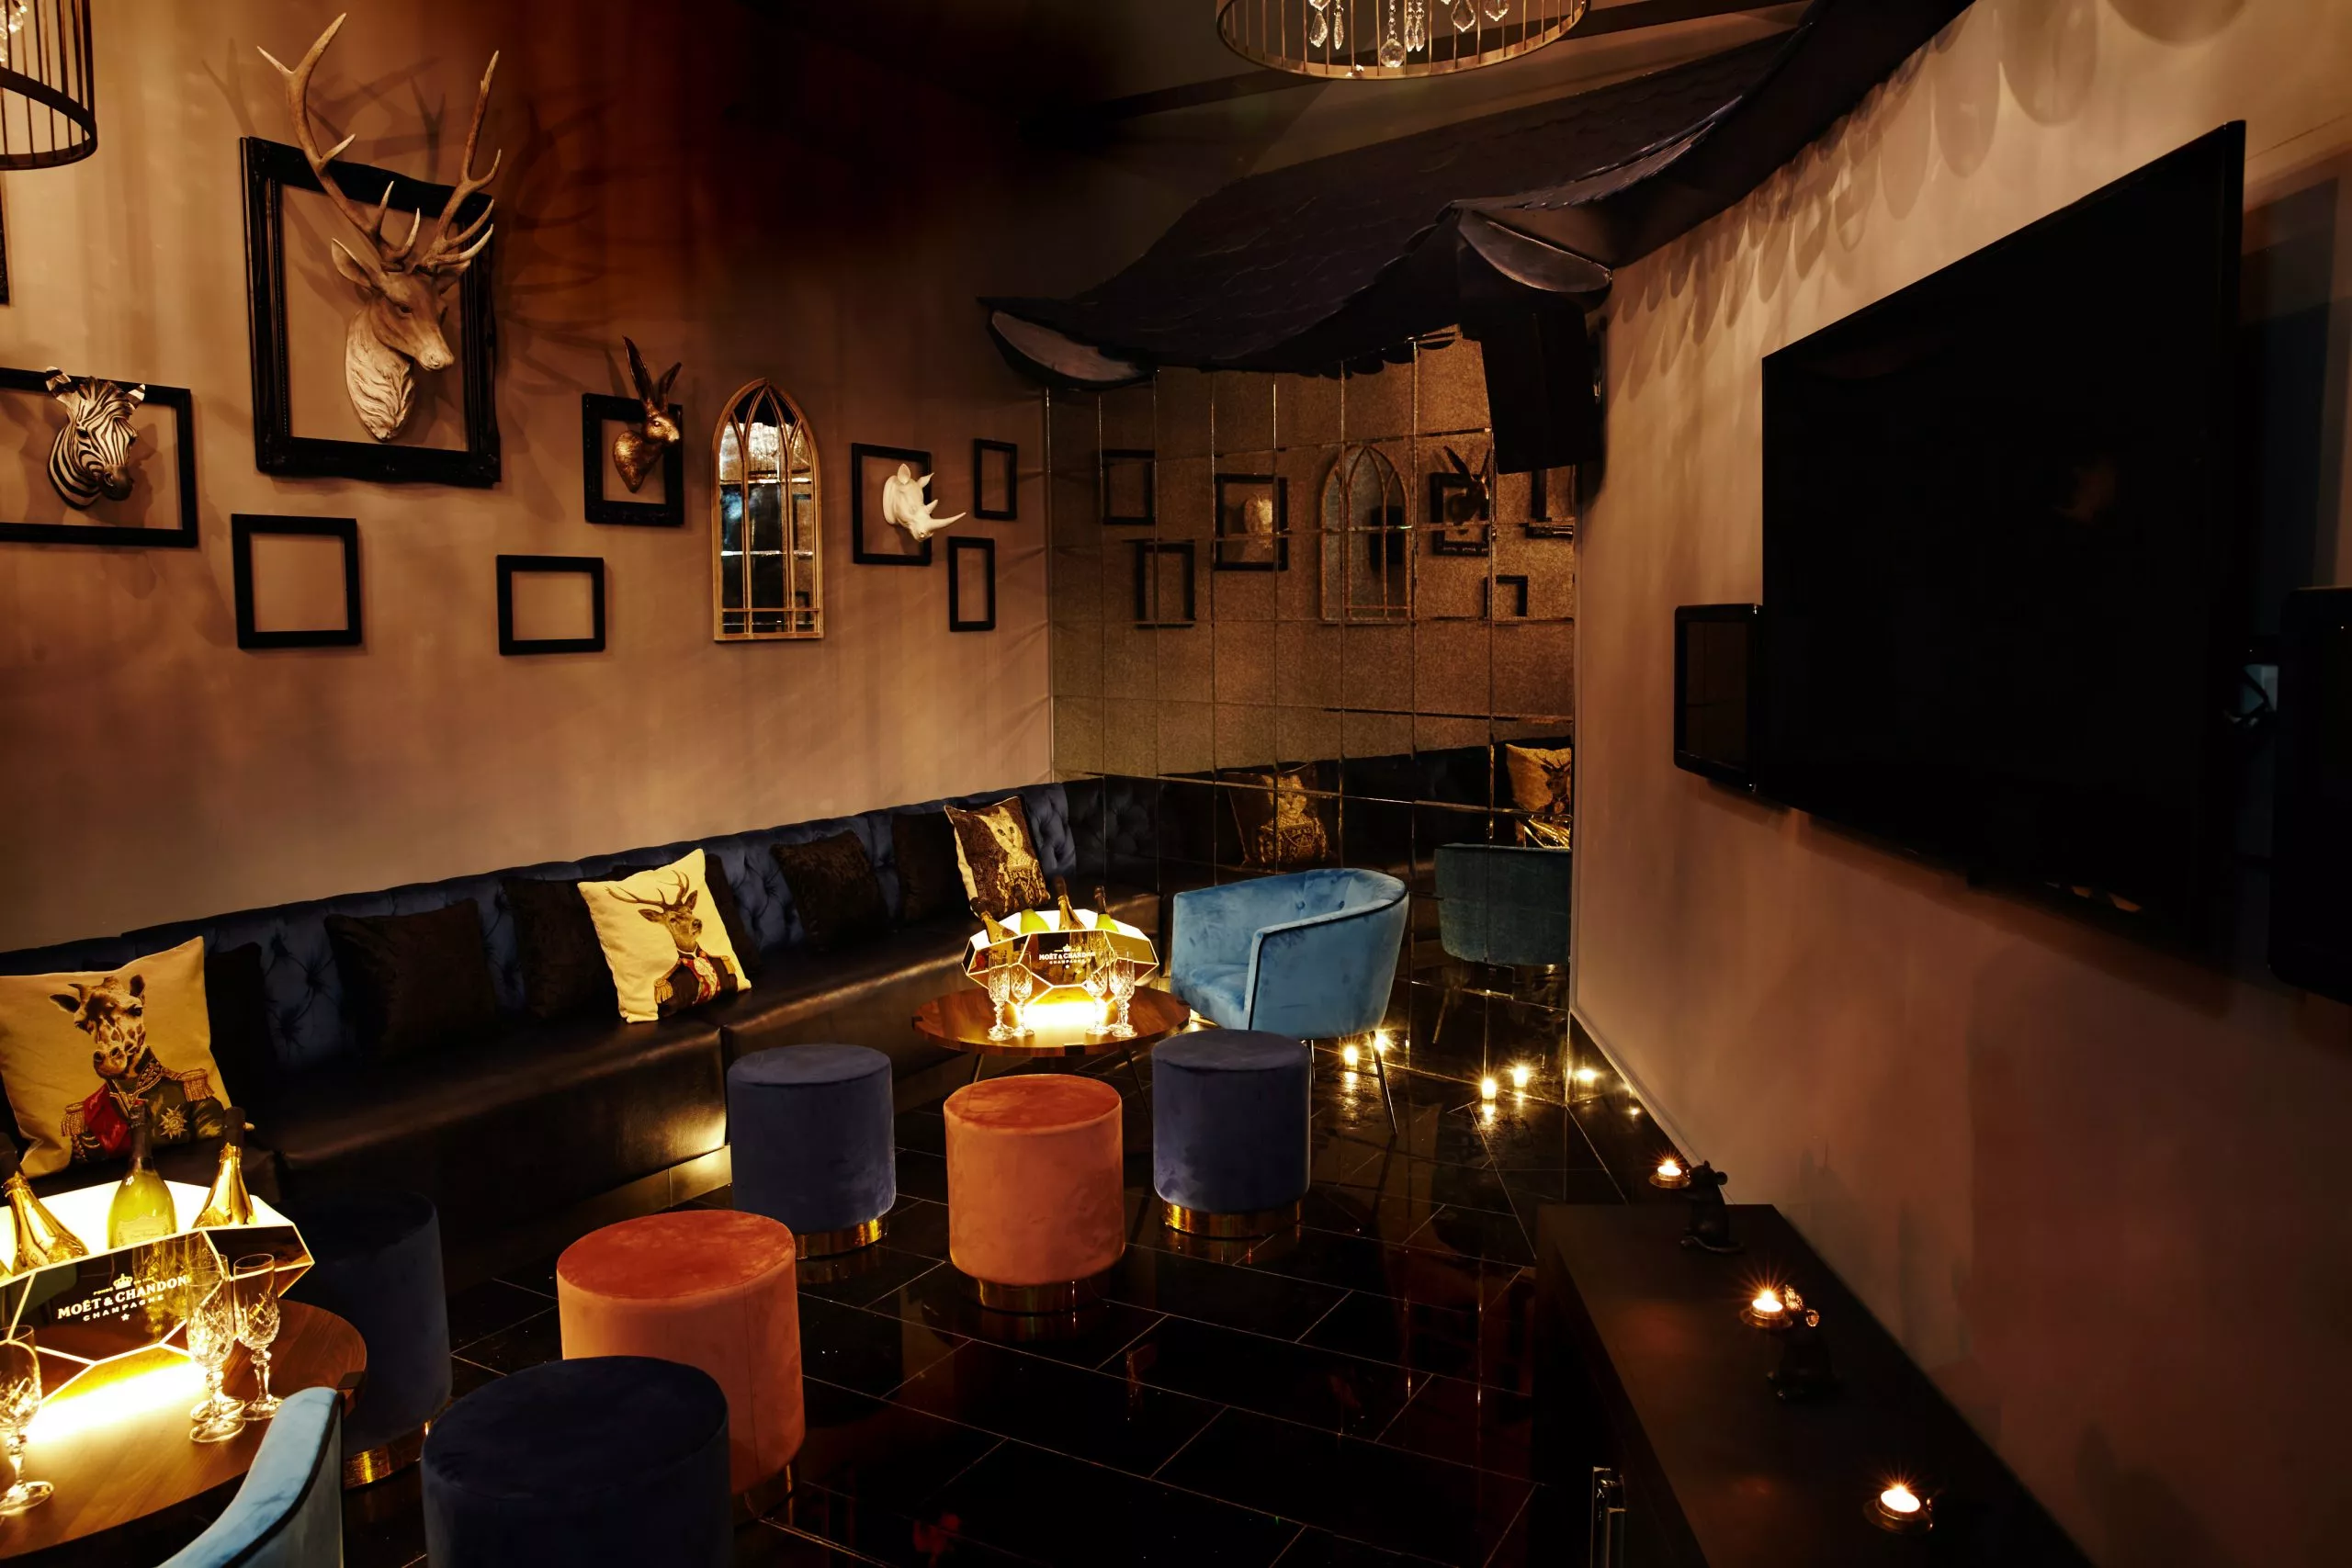 Thrones Lounge Bar & Restaurant in Uganda, Africa | Nightclubs,Restaurants - Rated 3.4